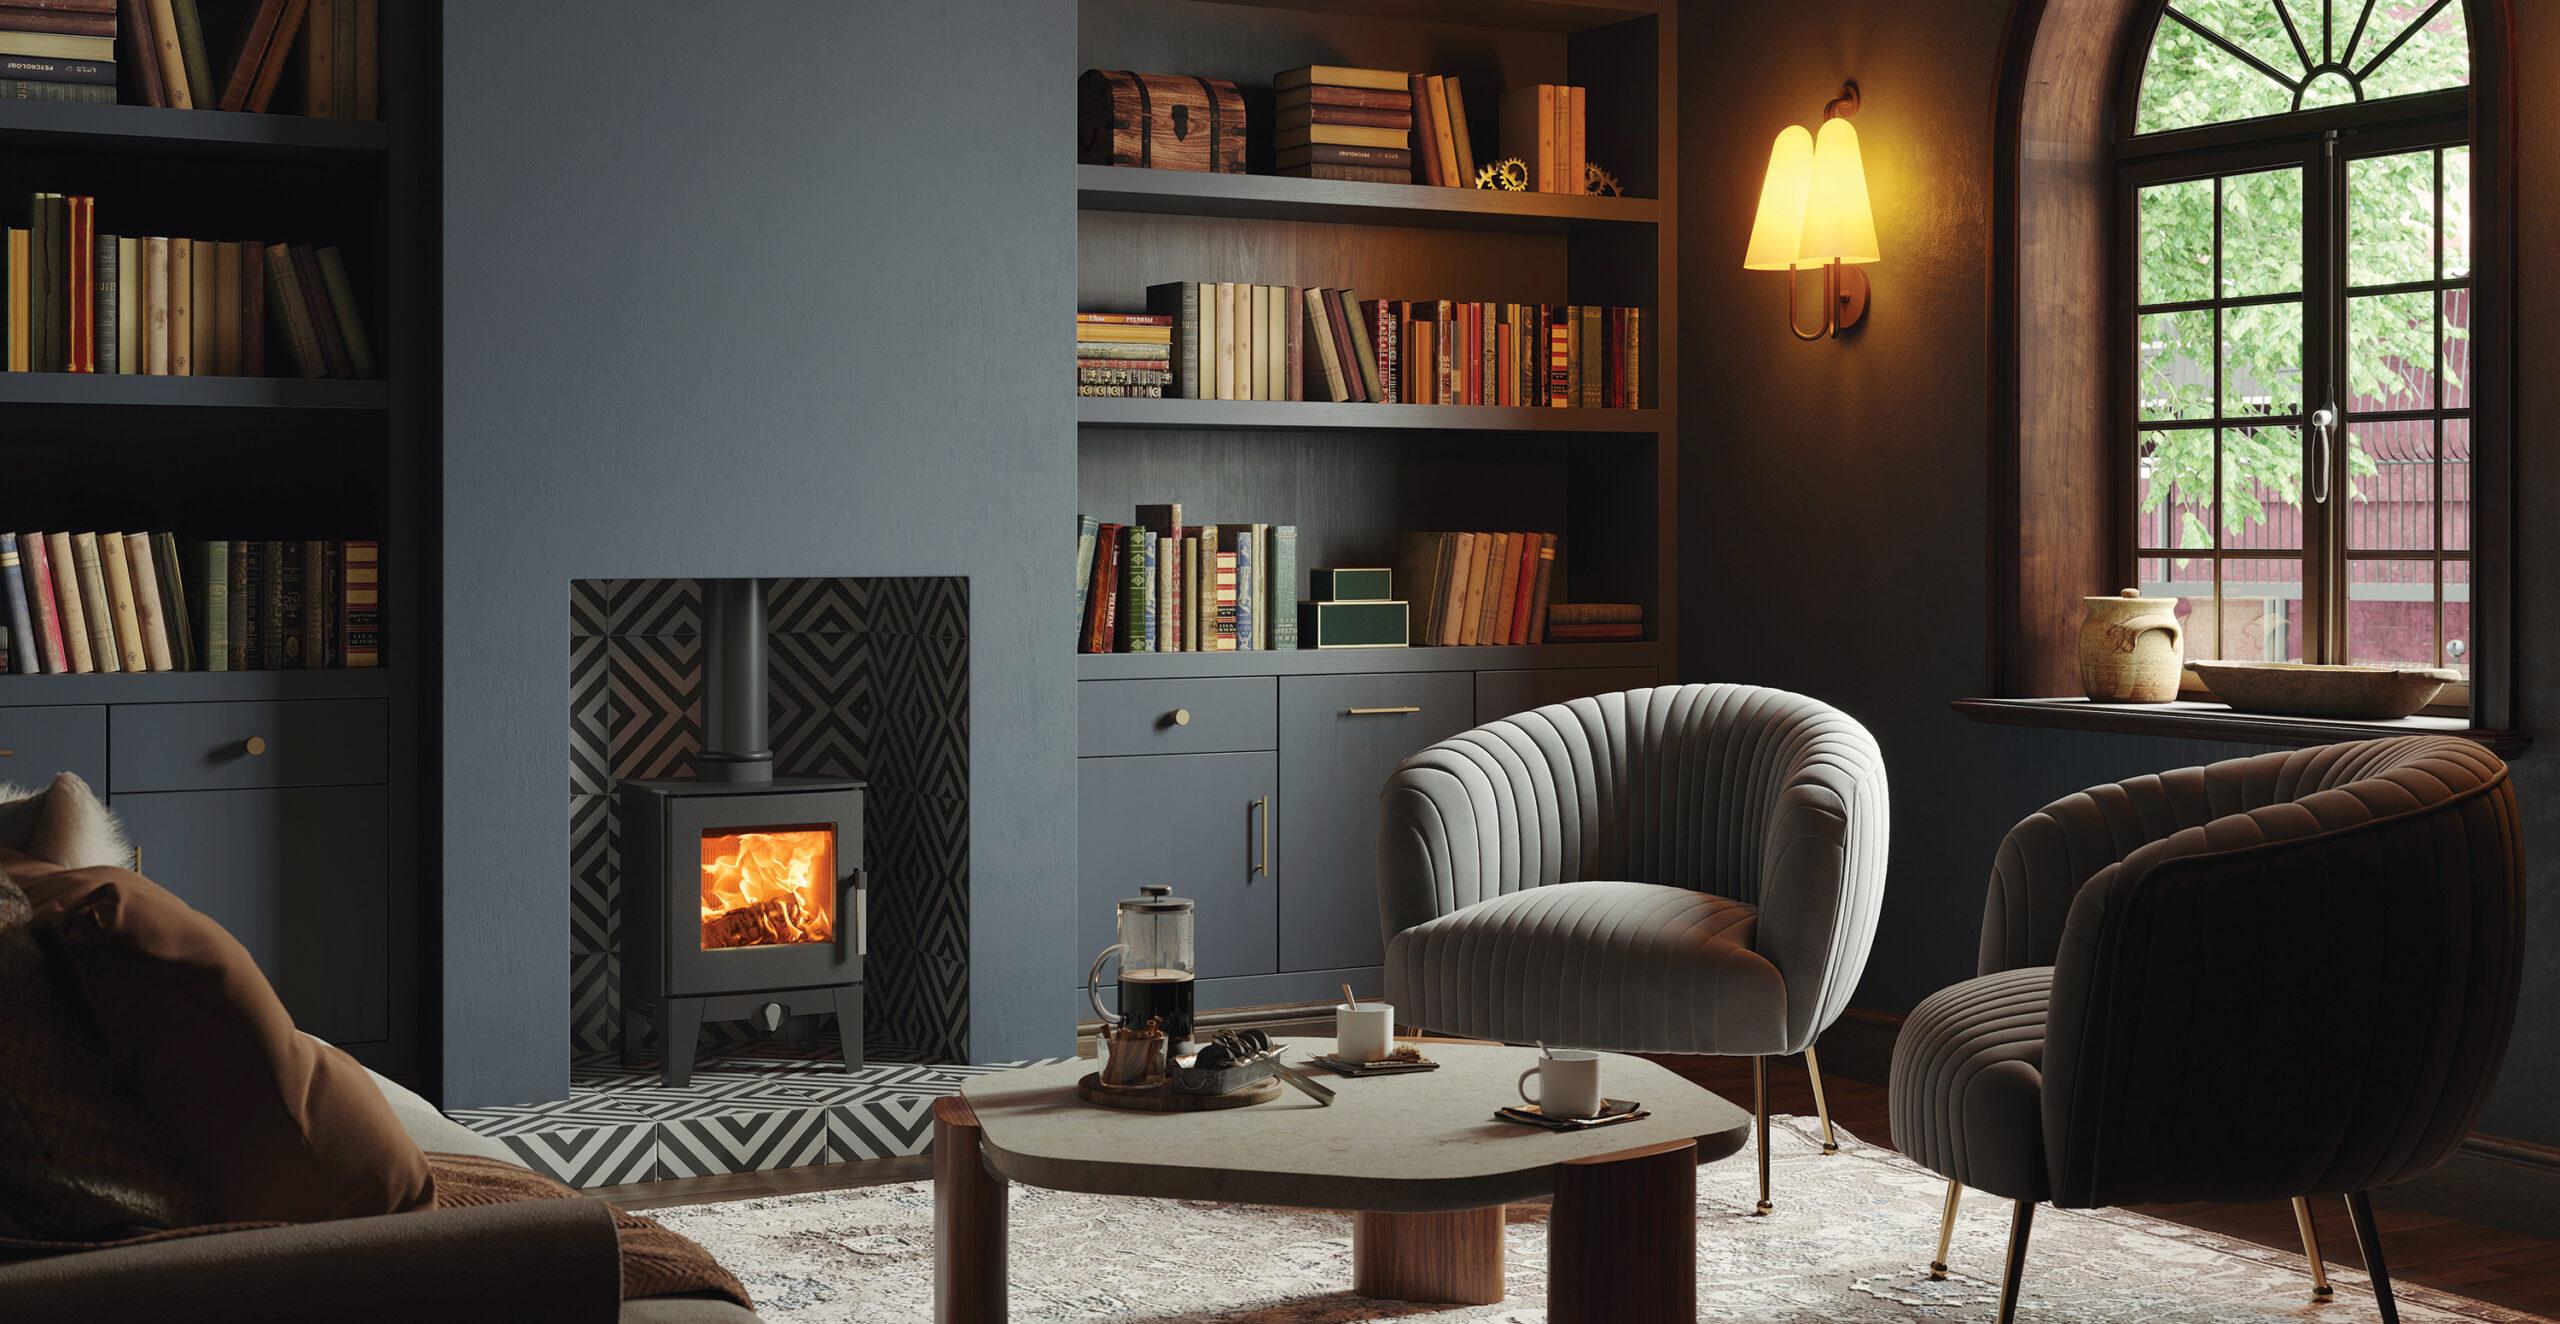 Stovax Futura 4 log burner. Modern fireplace with bold tiles.